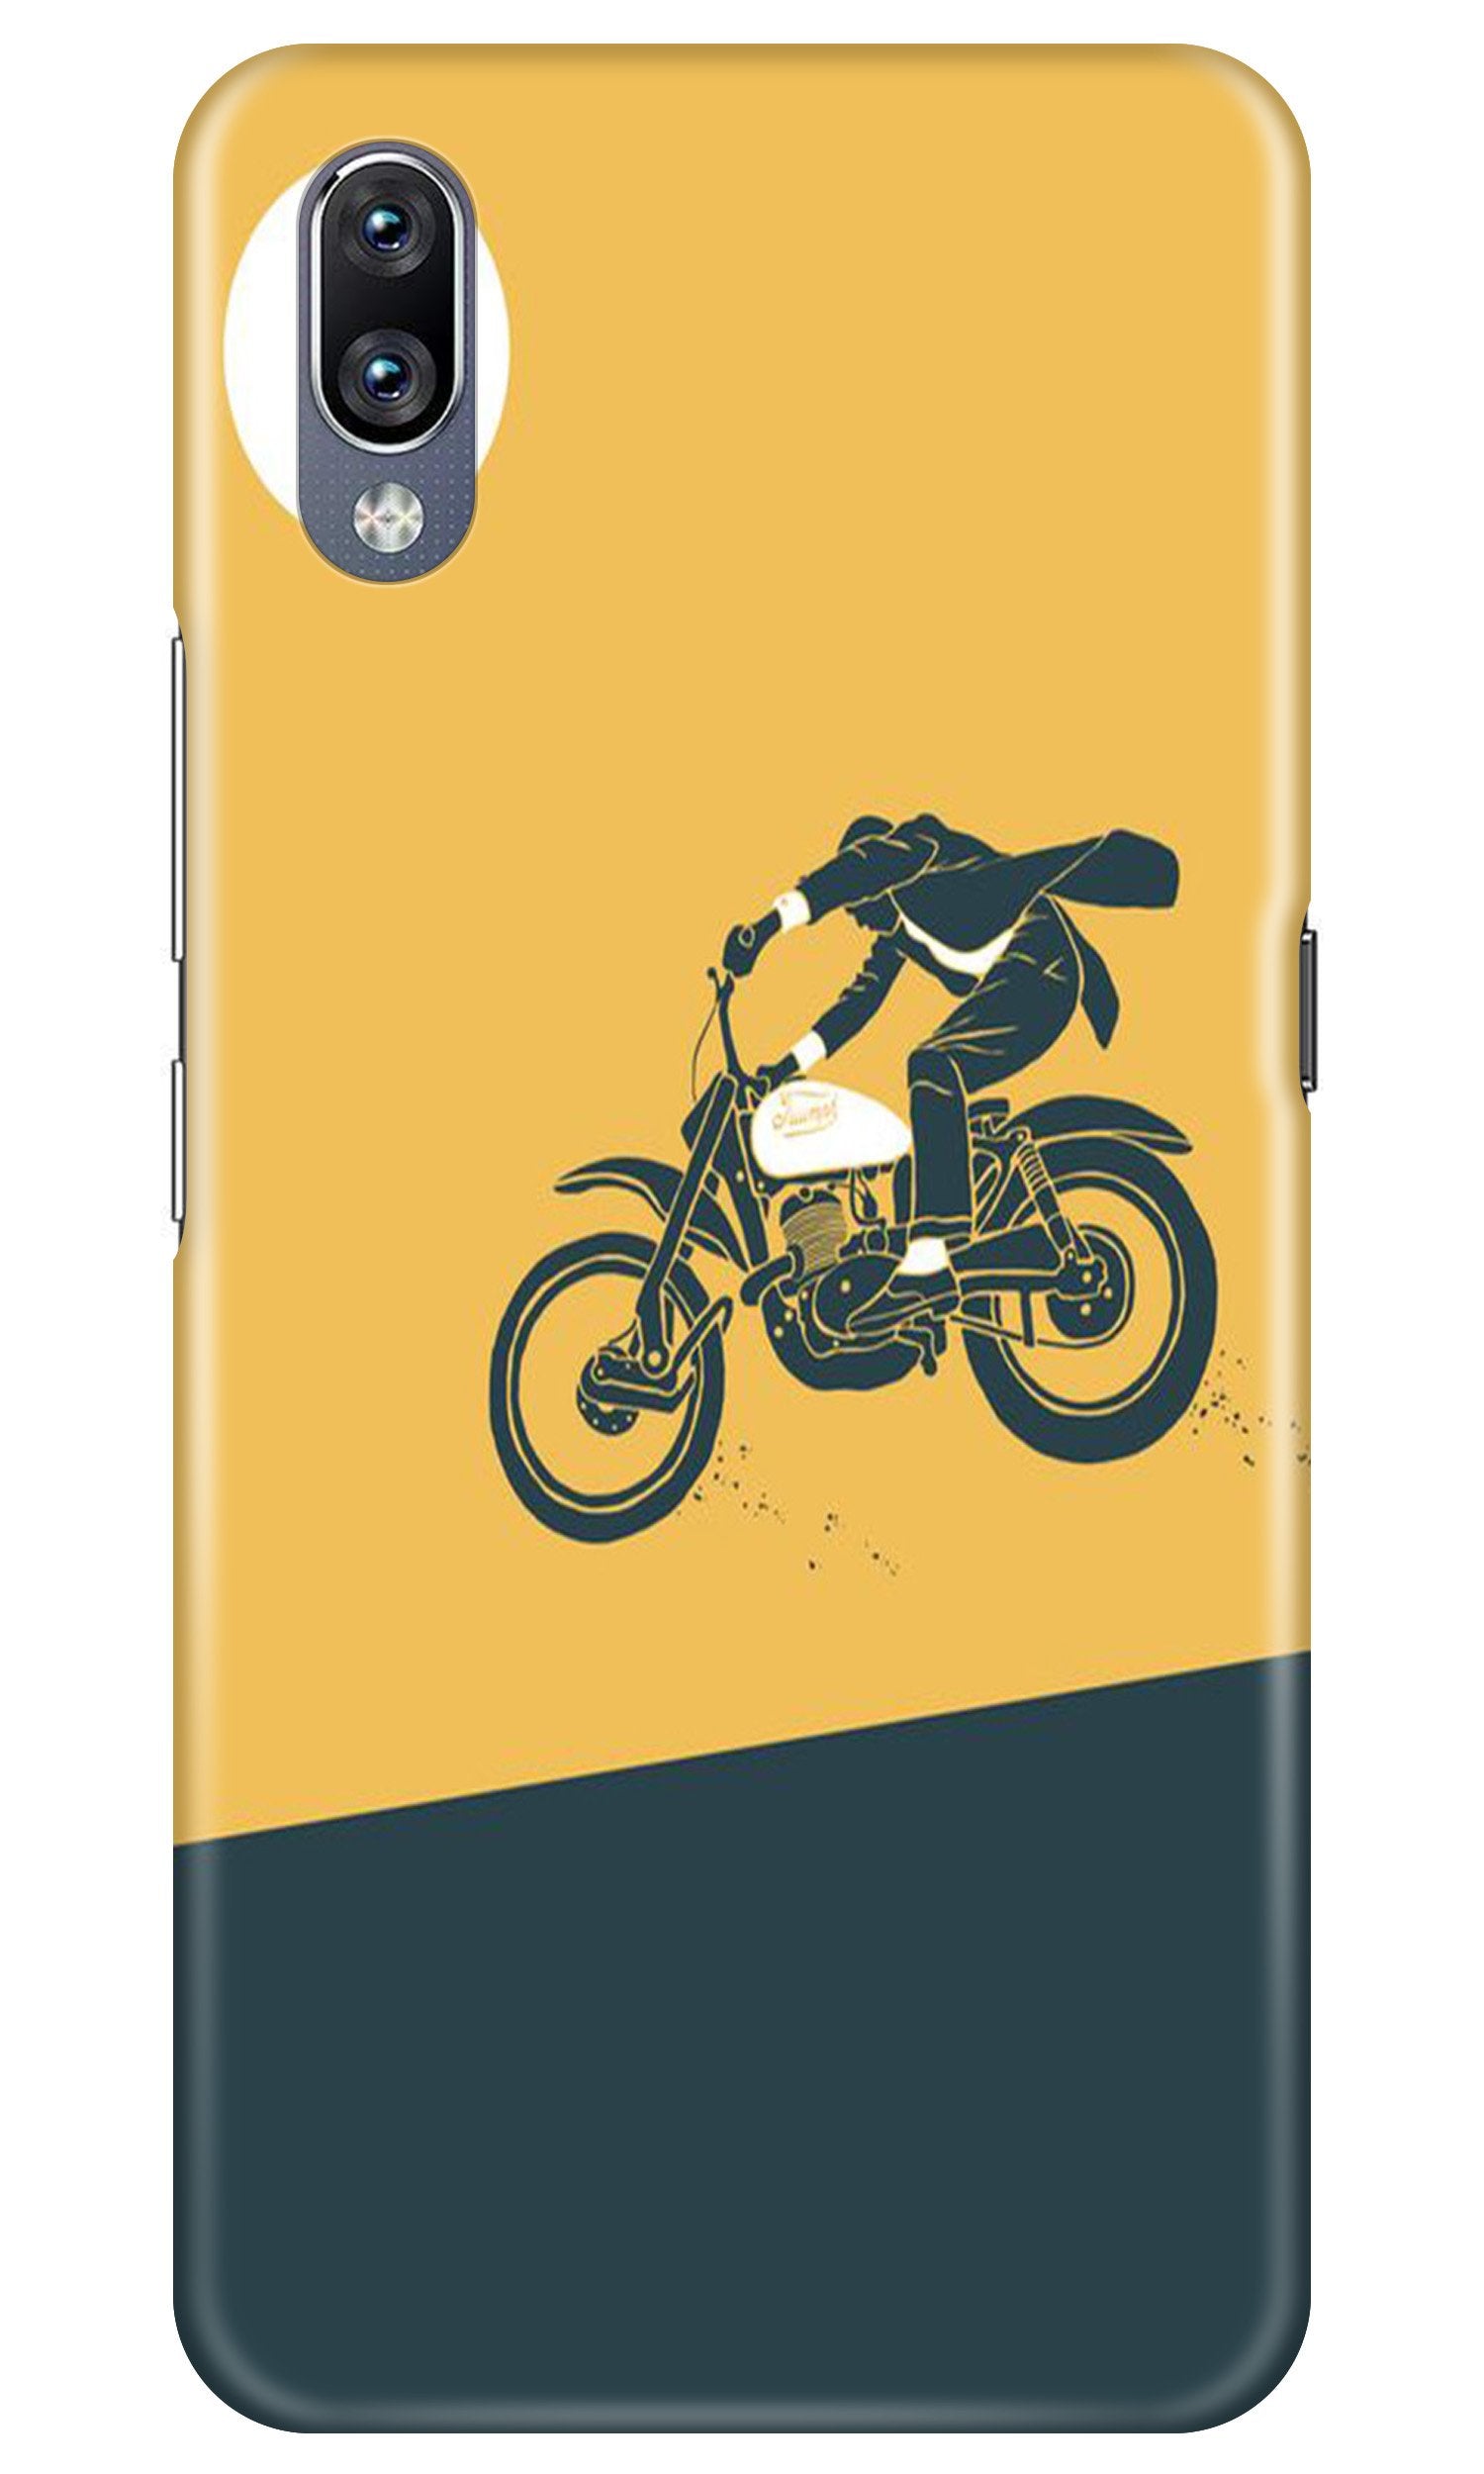 Bike Lovers Case for Vivo V11 Pro (Design No. 256)